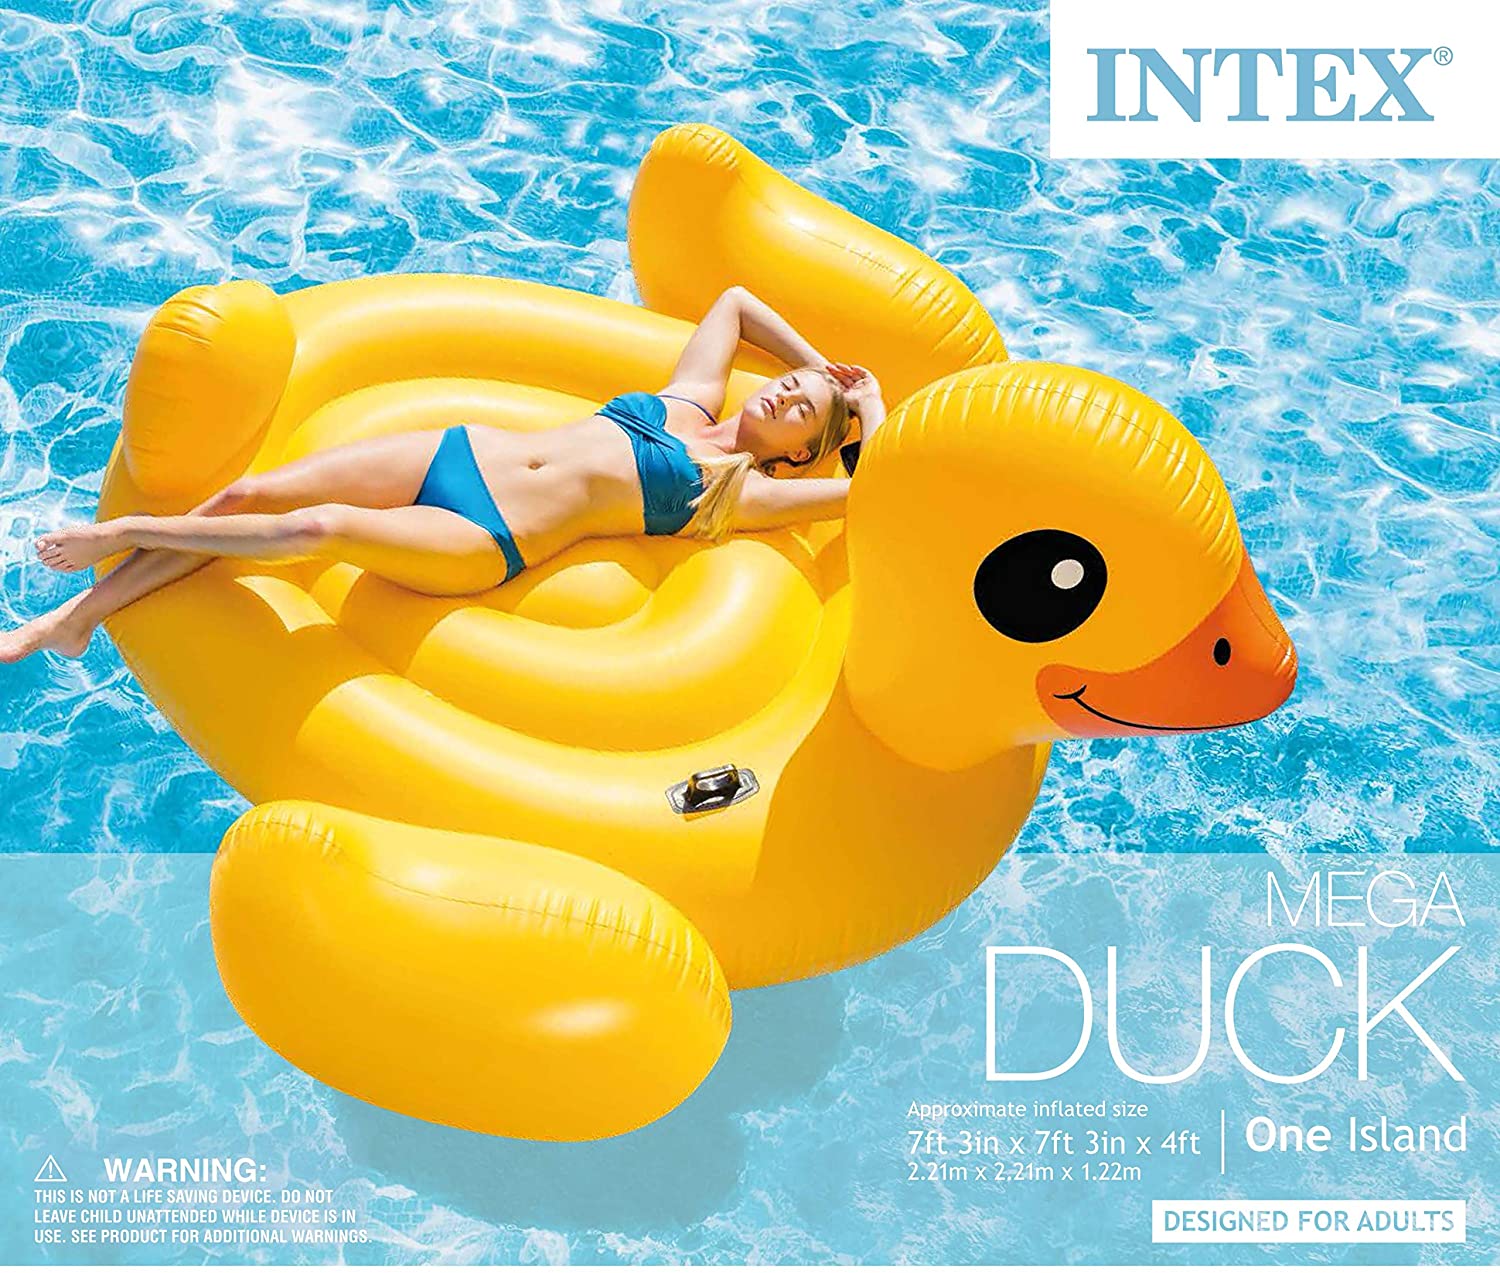 Intex+Mega+Yellow+Duck%2C+Inflatable+Island